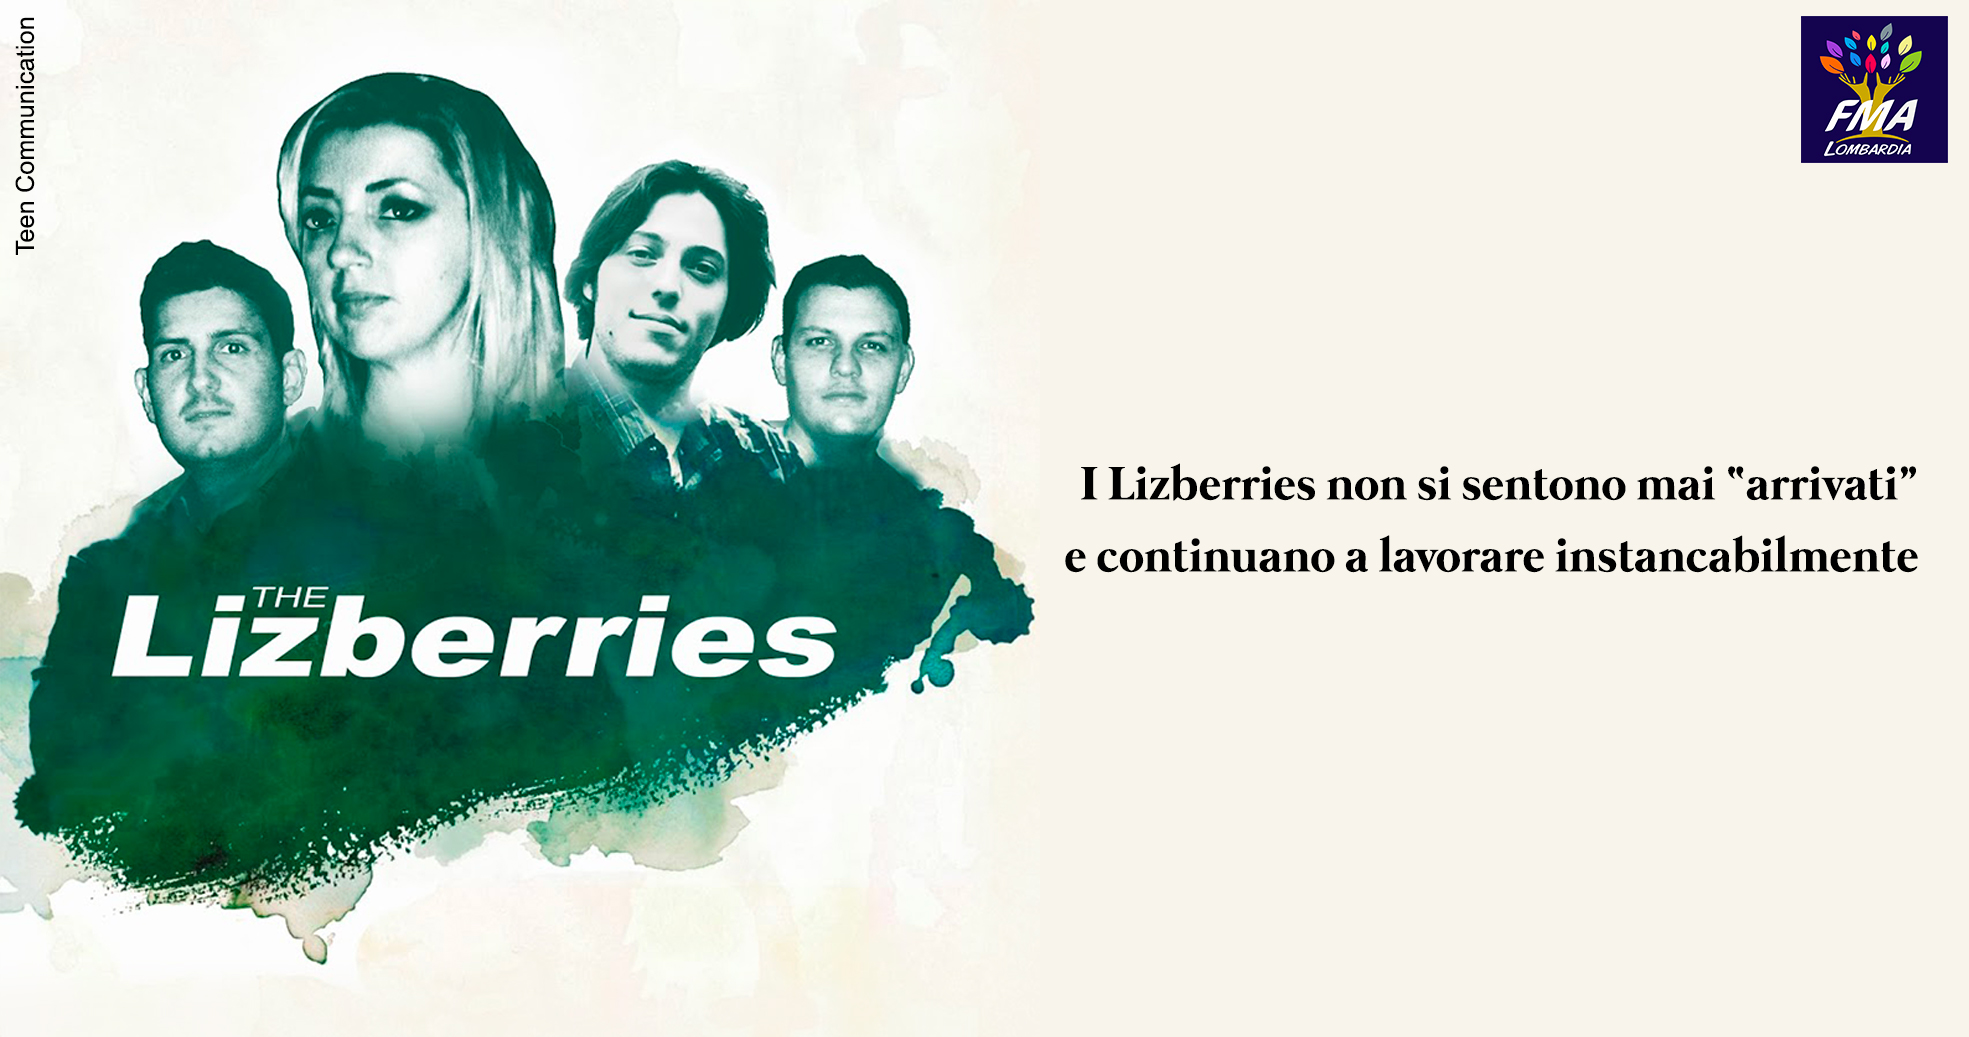 Lizberries: una storia d’amicizia